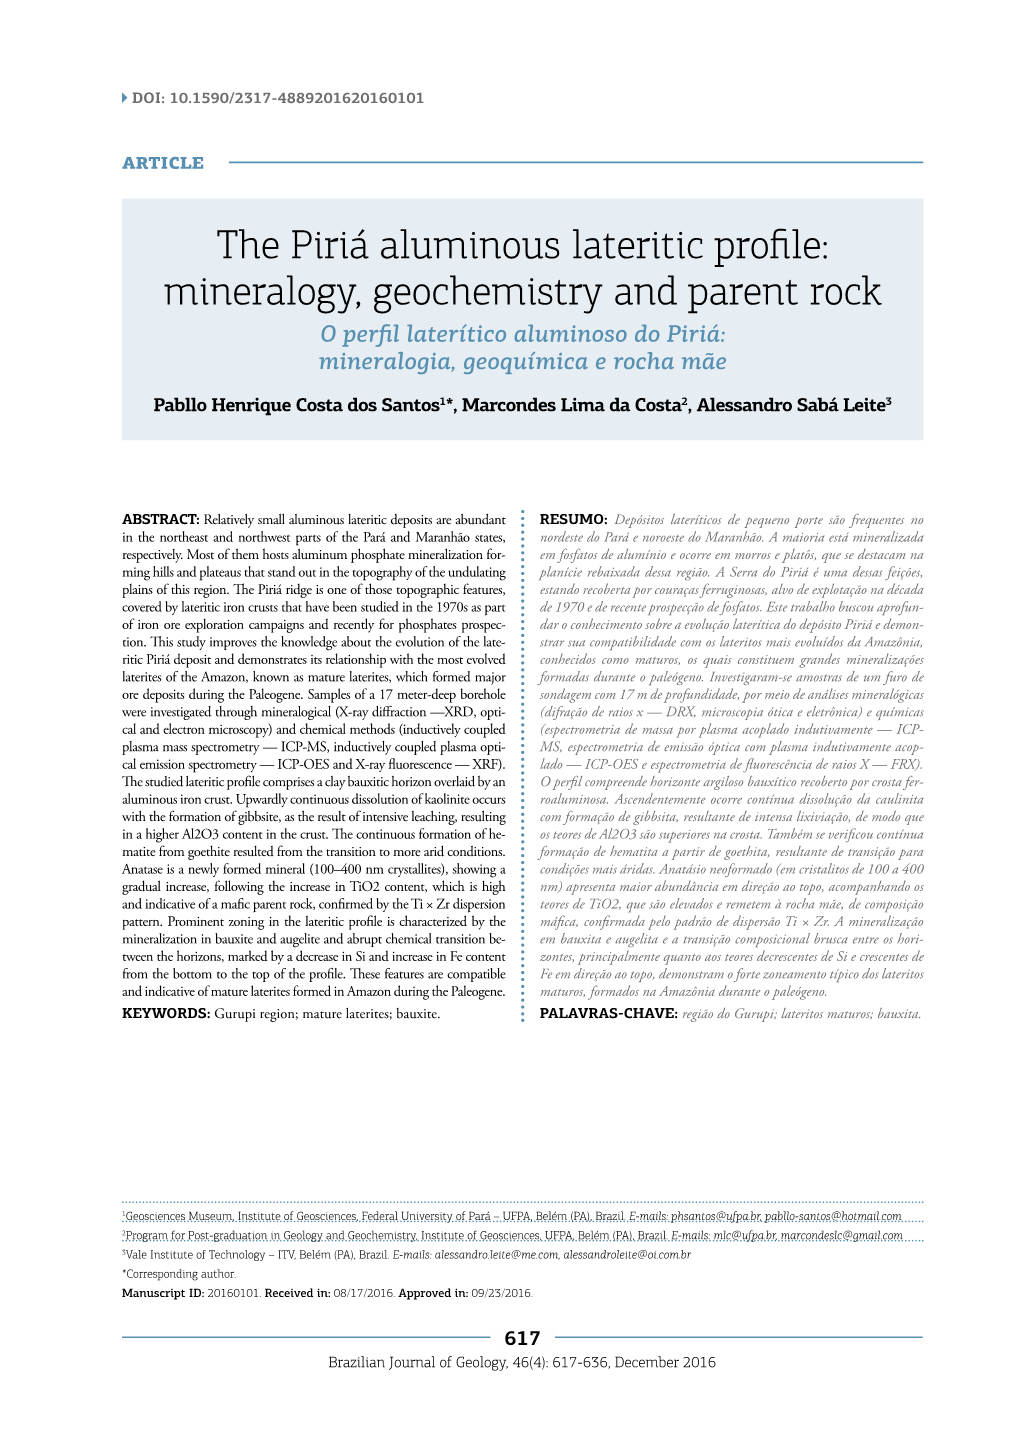 The Piriá Aluminous Lateritic Profile: Mineralogy, Geochemistry and Parent Rock O Perfil Laterítico Aluminoso Do Piriá: Mineralogia, Geoquímica E Rocha Mãe